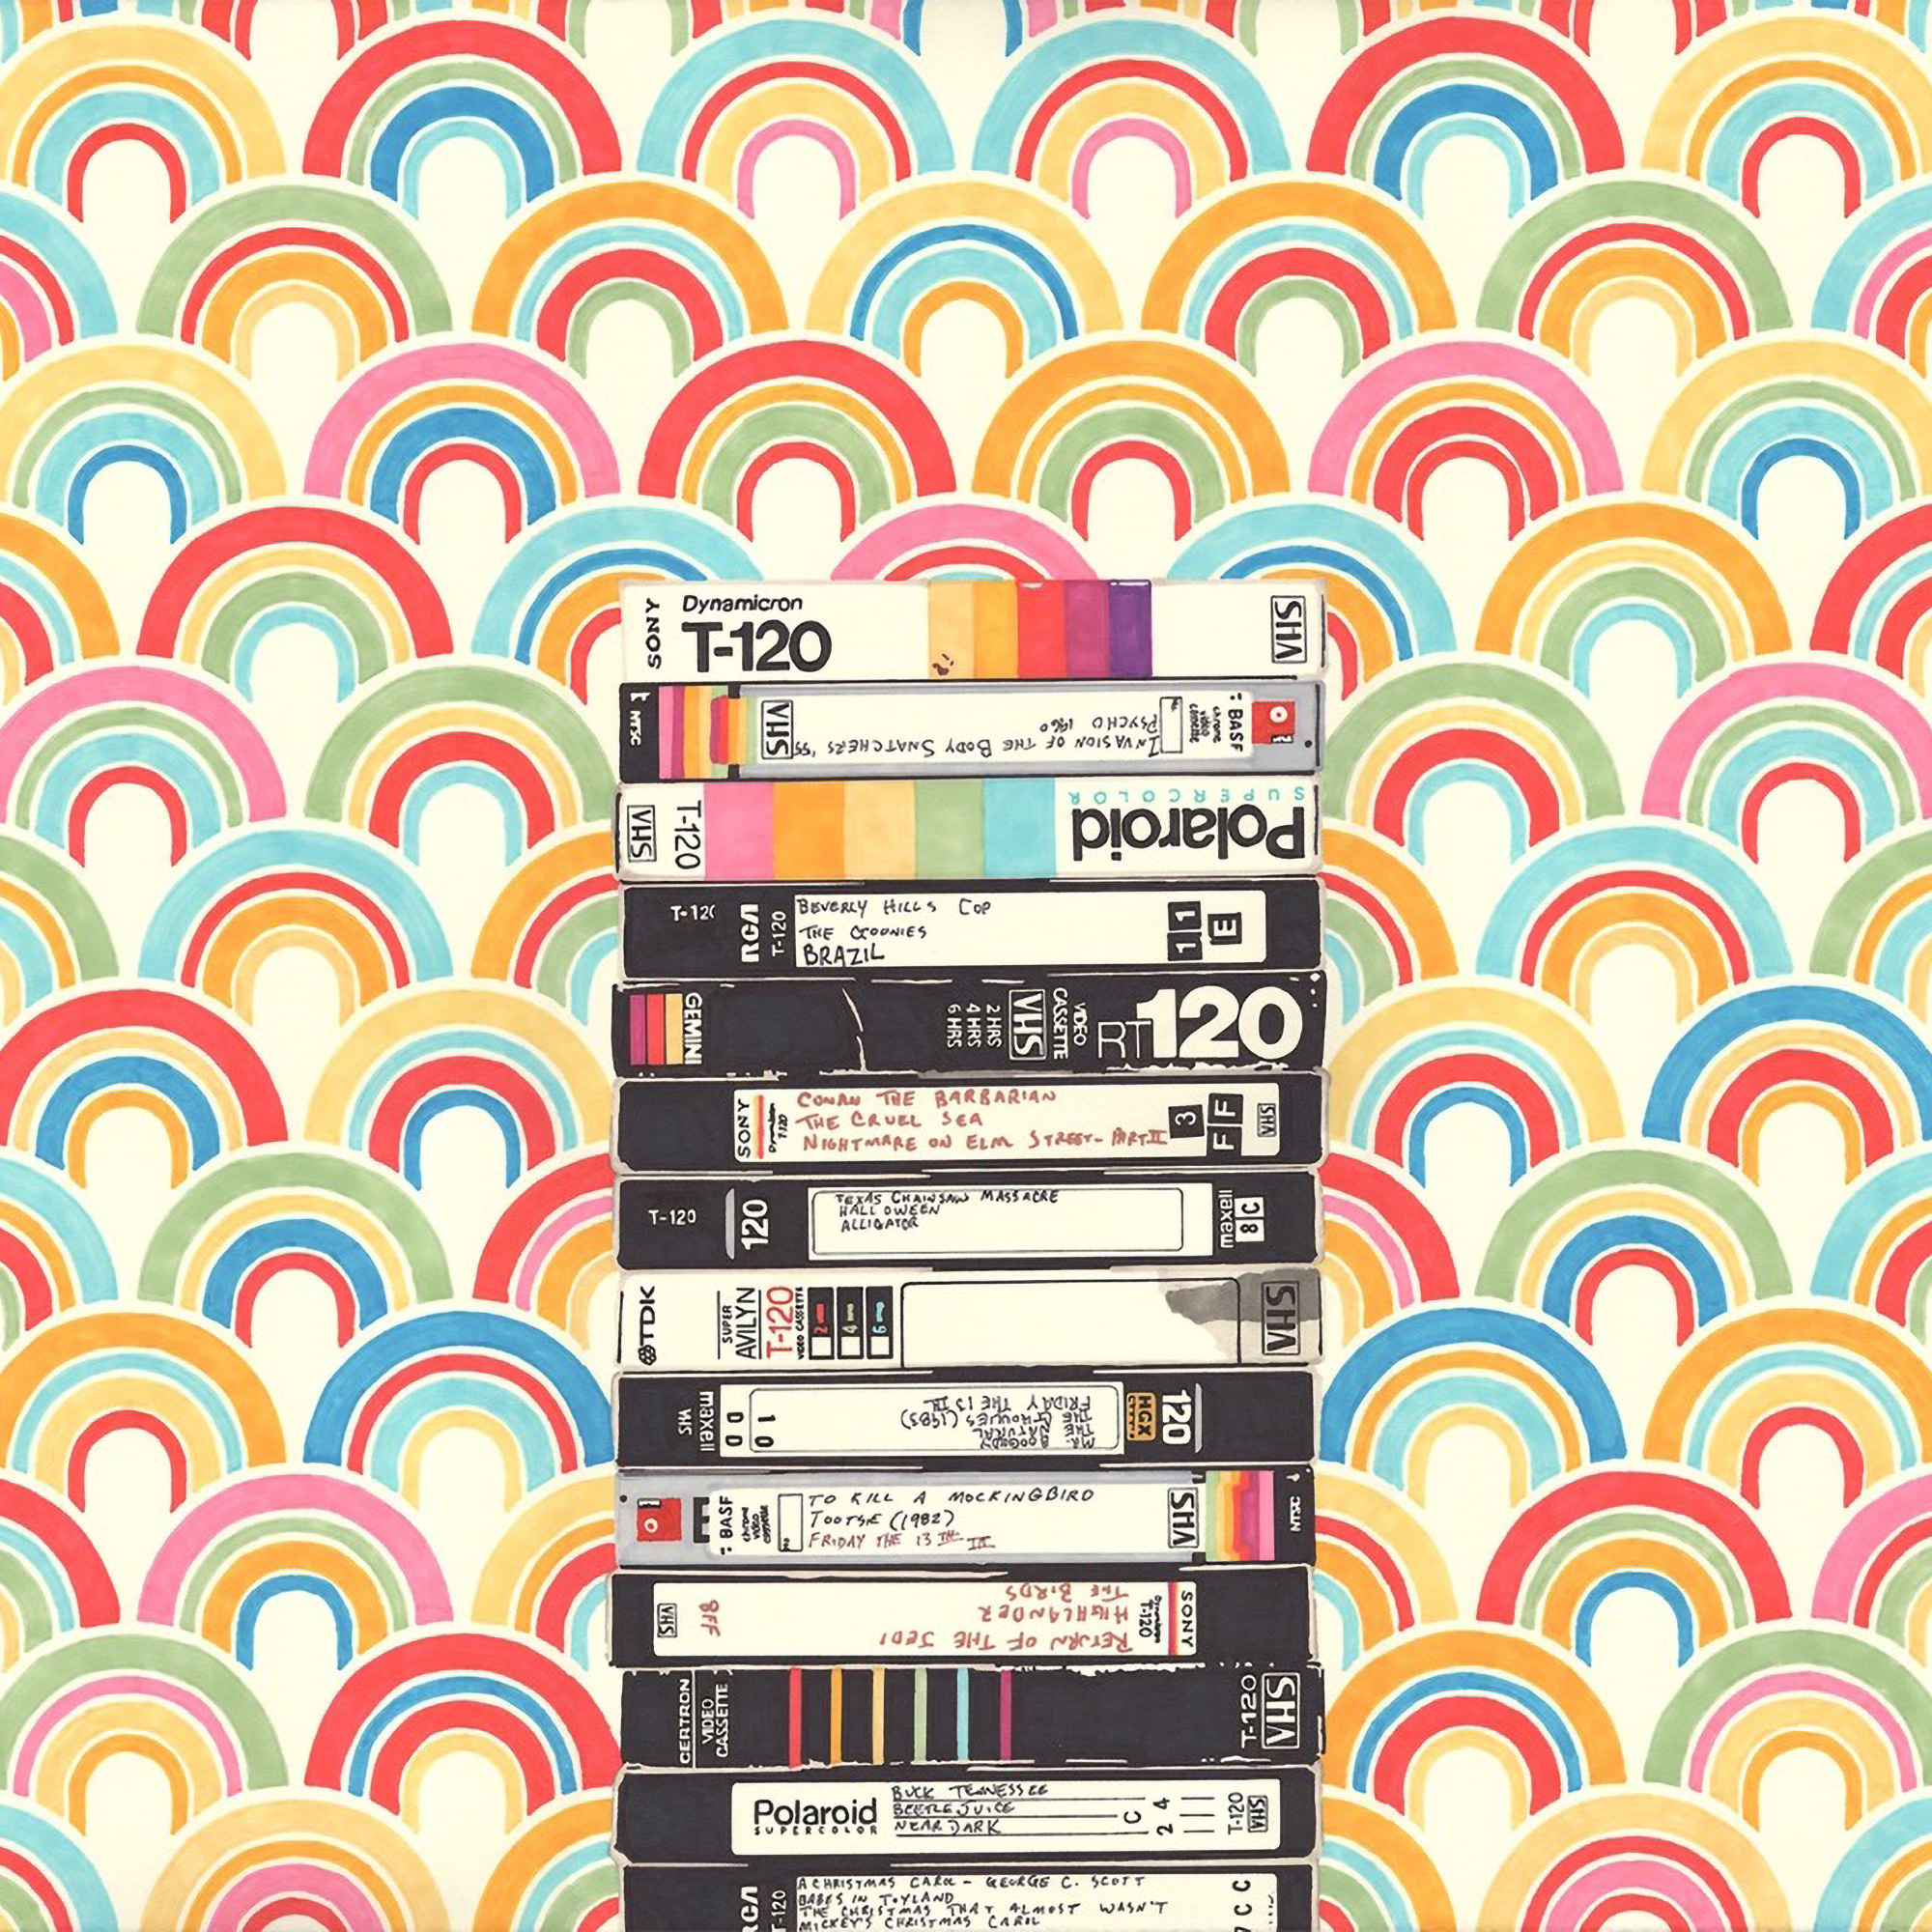 VHS & Rainbows by Hollis Brown Thornton